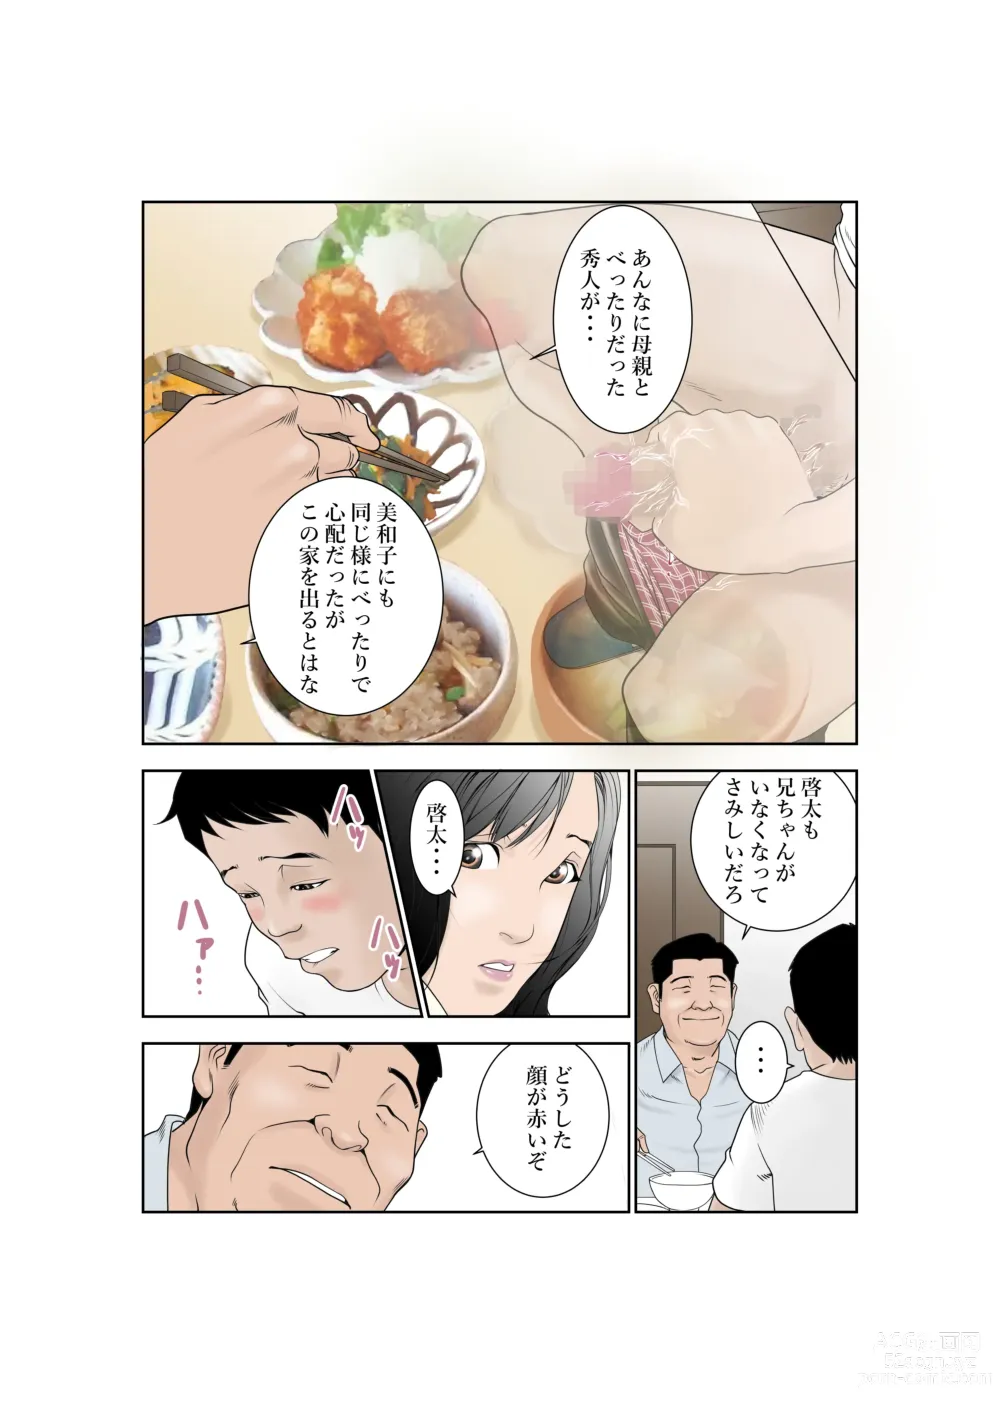 Page 30 of doujinshi Shiawase Kazoku no Sodate kata